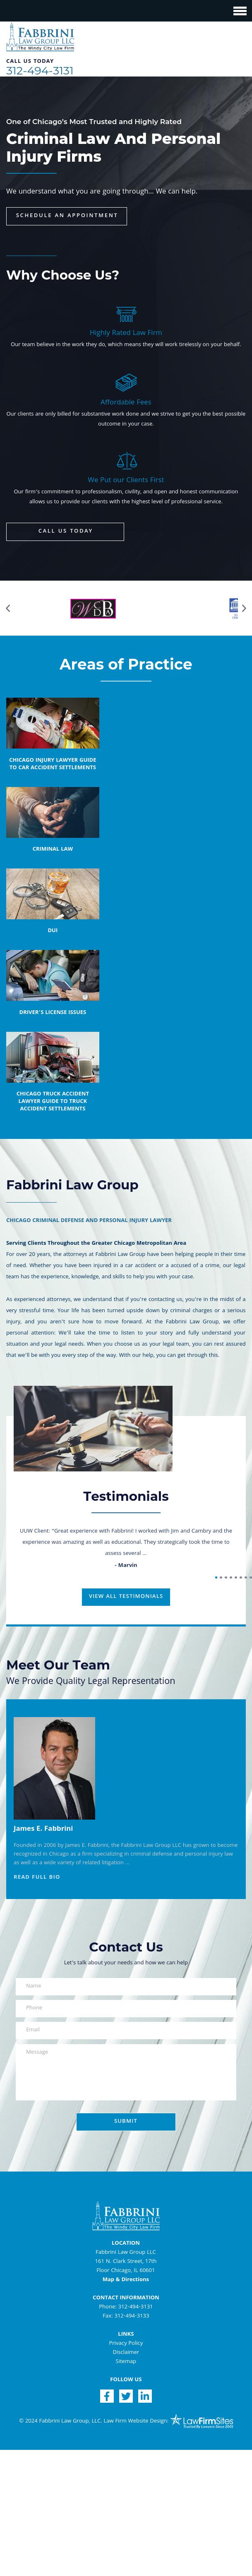 Fabbrini Law Group LLC - Chicago IL Lawyers